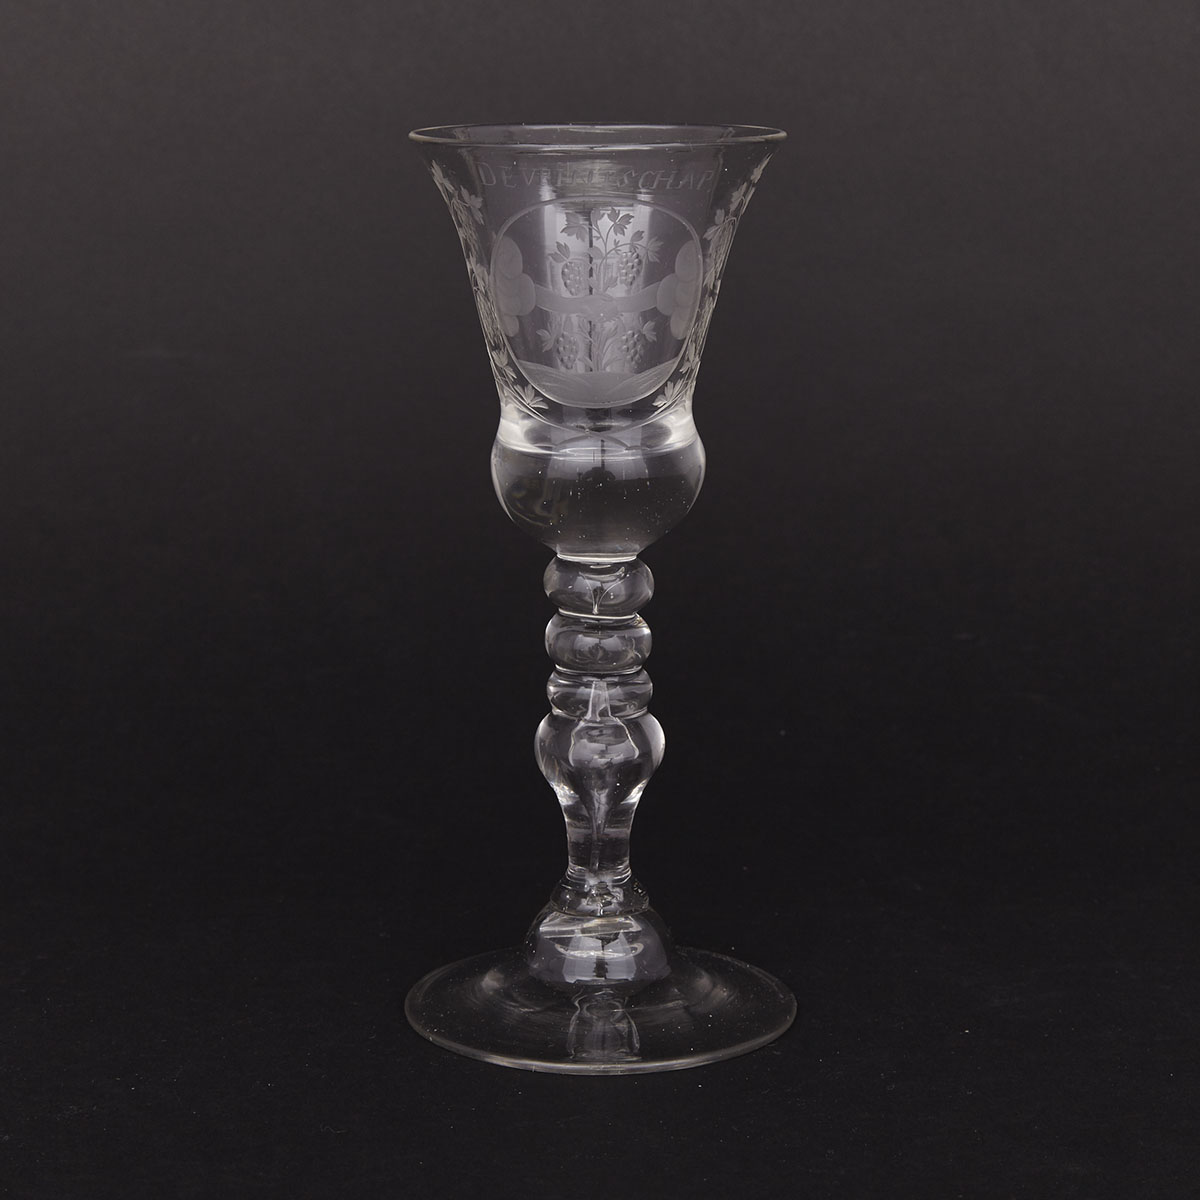 Dutch Engraved Wine Glass, mid-18th century